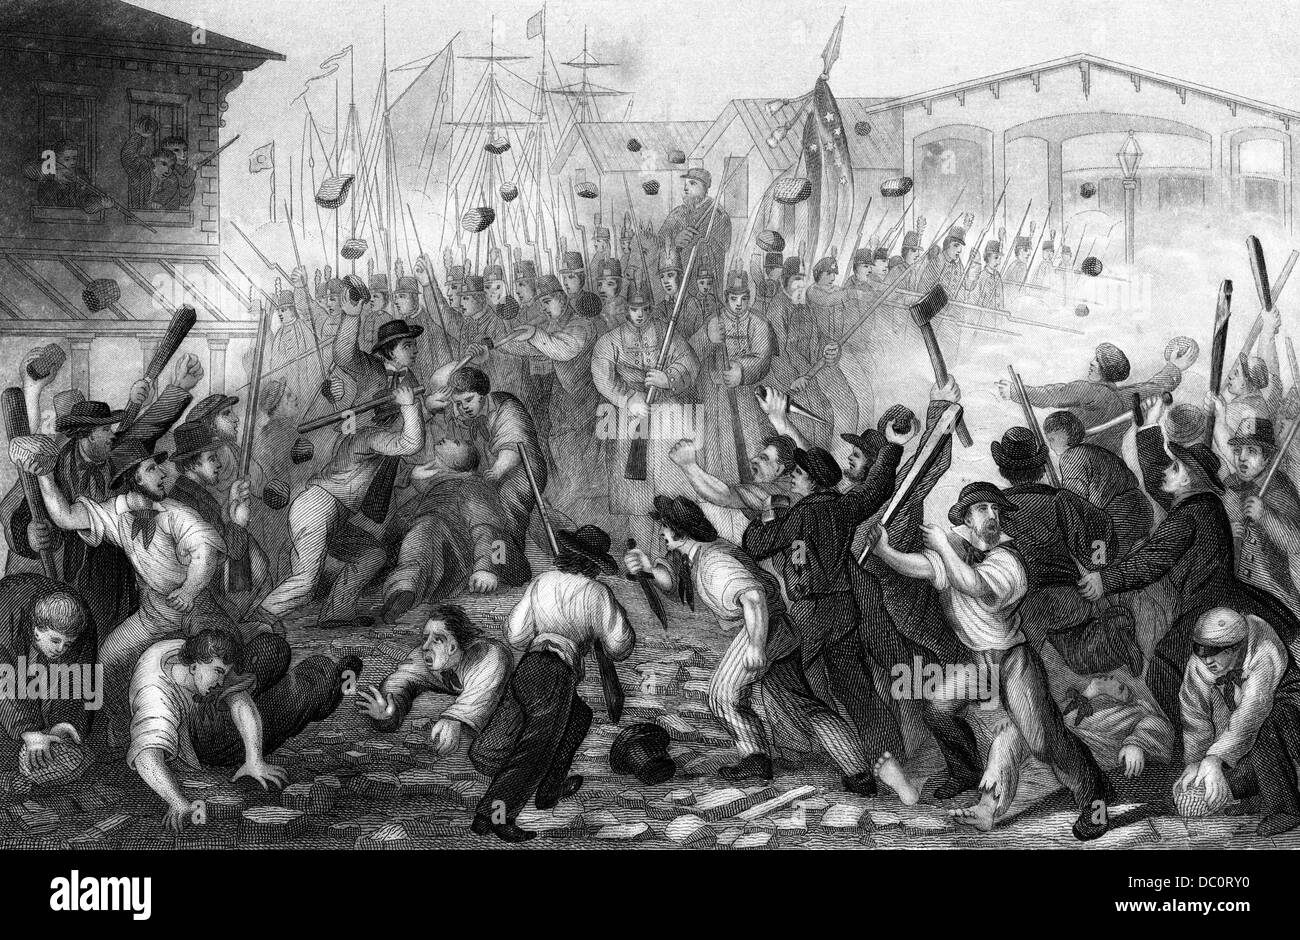 APRIL 19, 1861 FIRST CIVIL WAR BLOODSHED BALTIMORE PRATT STREET RIOT SOUTHERN SYMPATHIZERS ATTACK MASSACHUSETTS REGIMENT Stock Photo